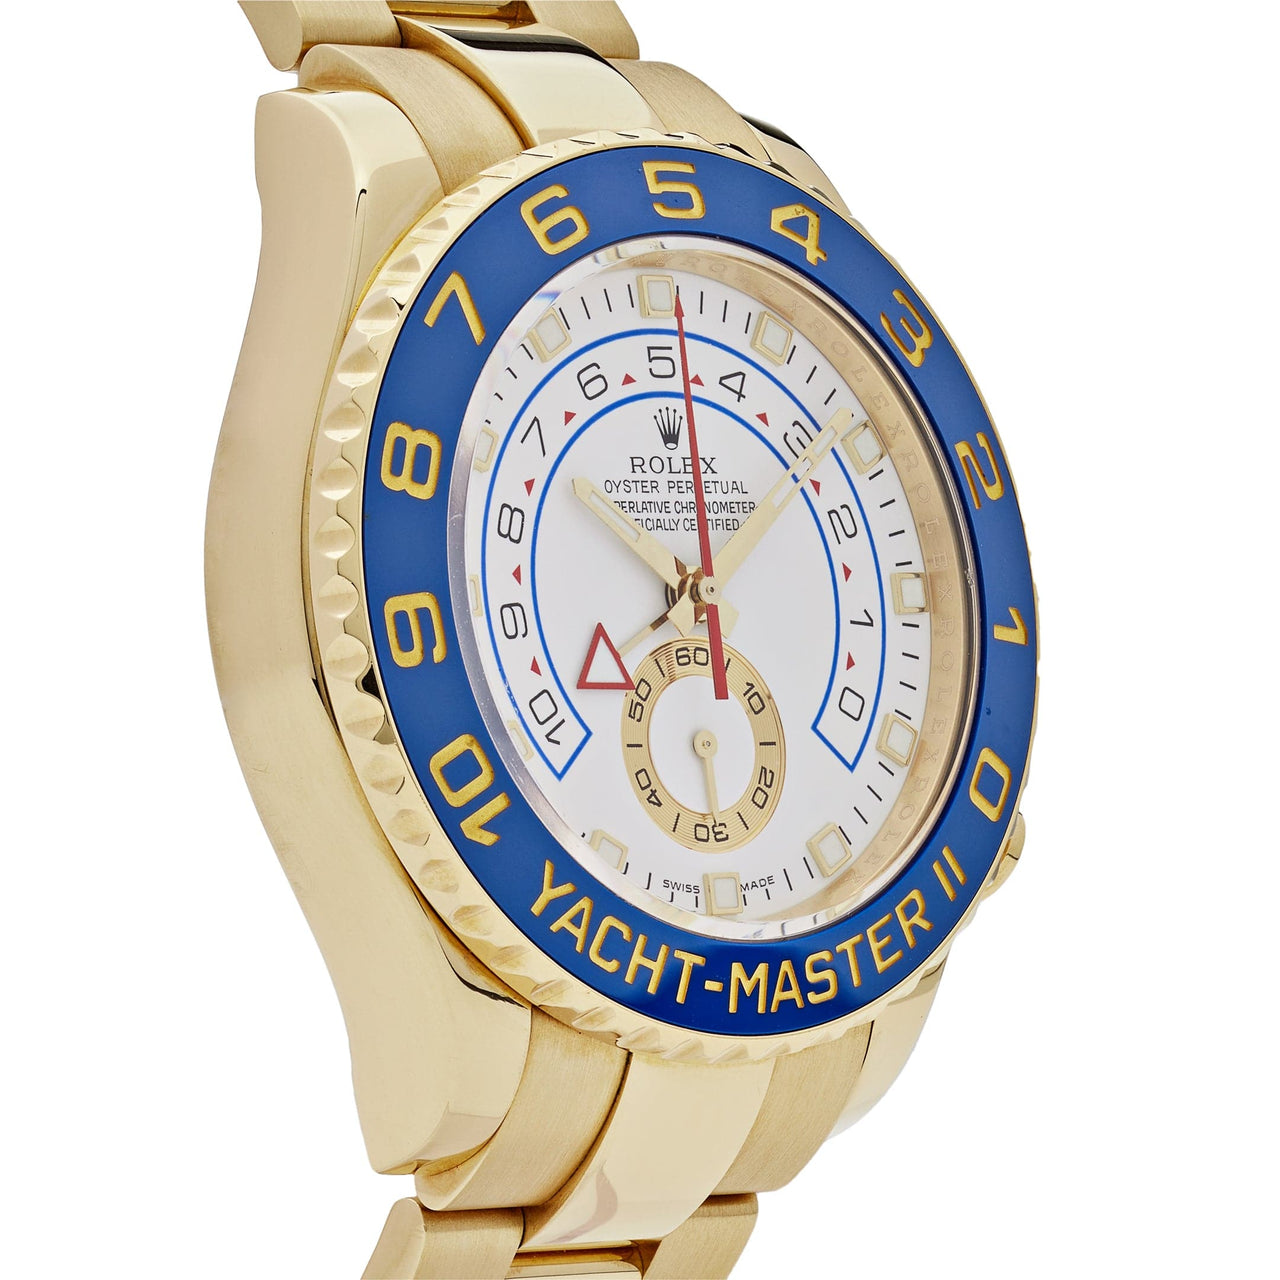 Rolex Yacht-Master II Yellow Gold White Dial 116688 (2009) wrist aficionado